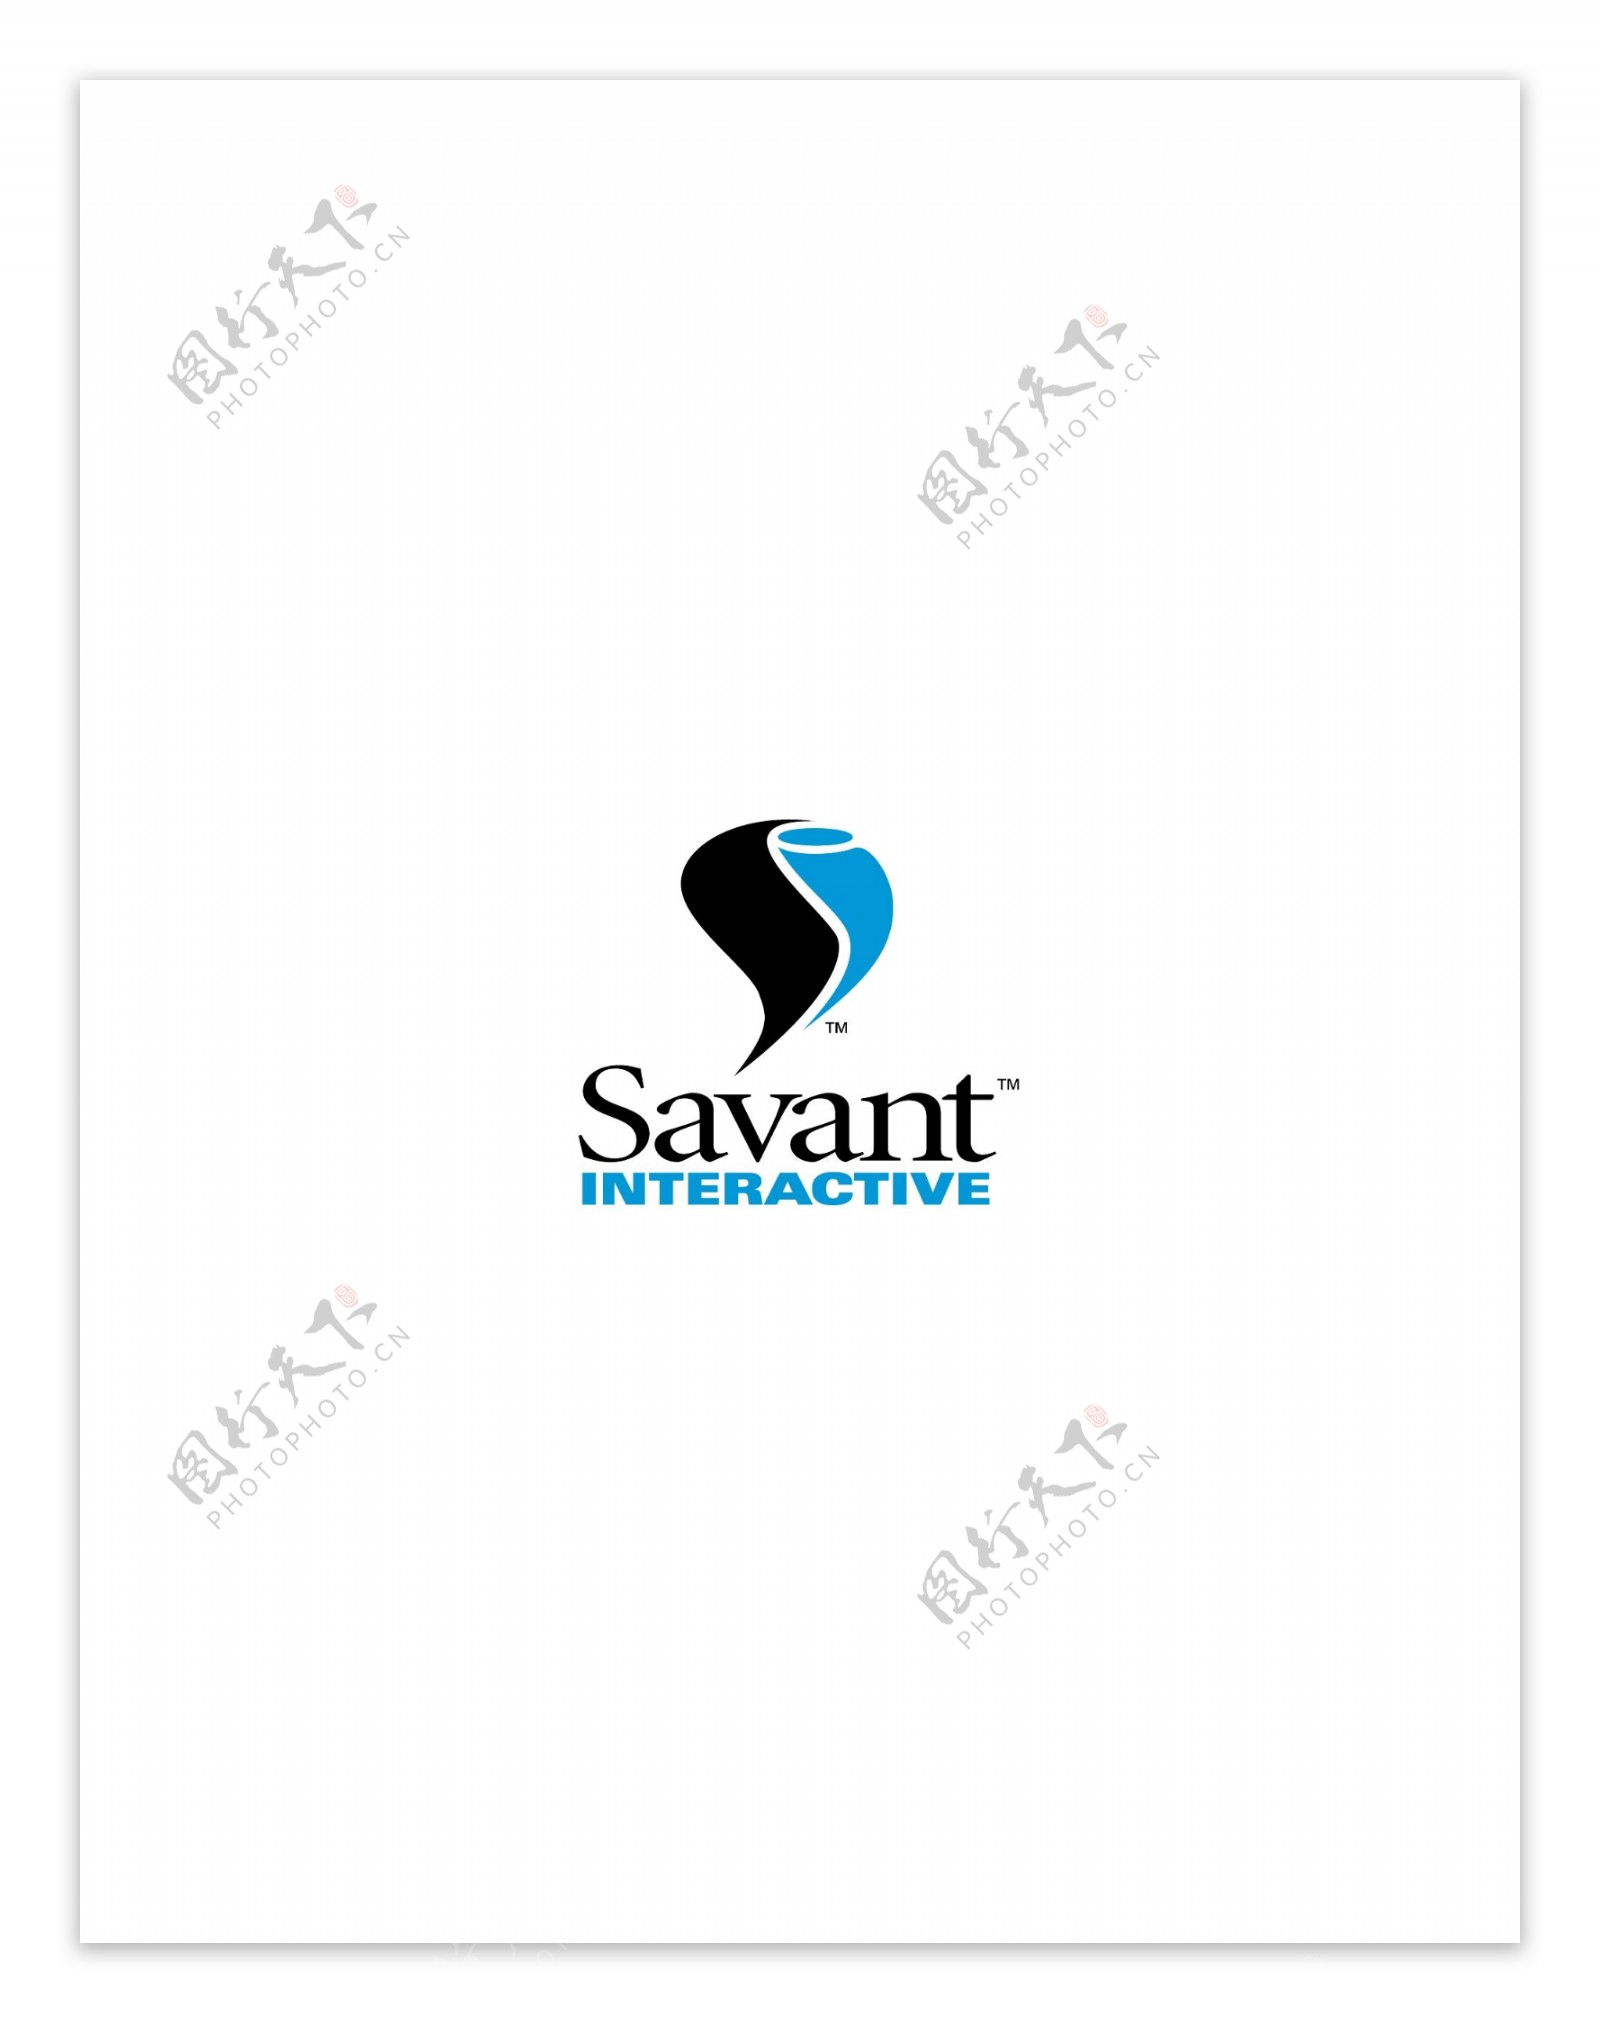 SavantInteractivelogo设计欣赏网站标志设计SavantInteractive下载标志设计欣赏